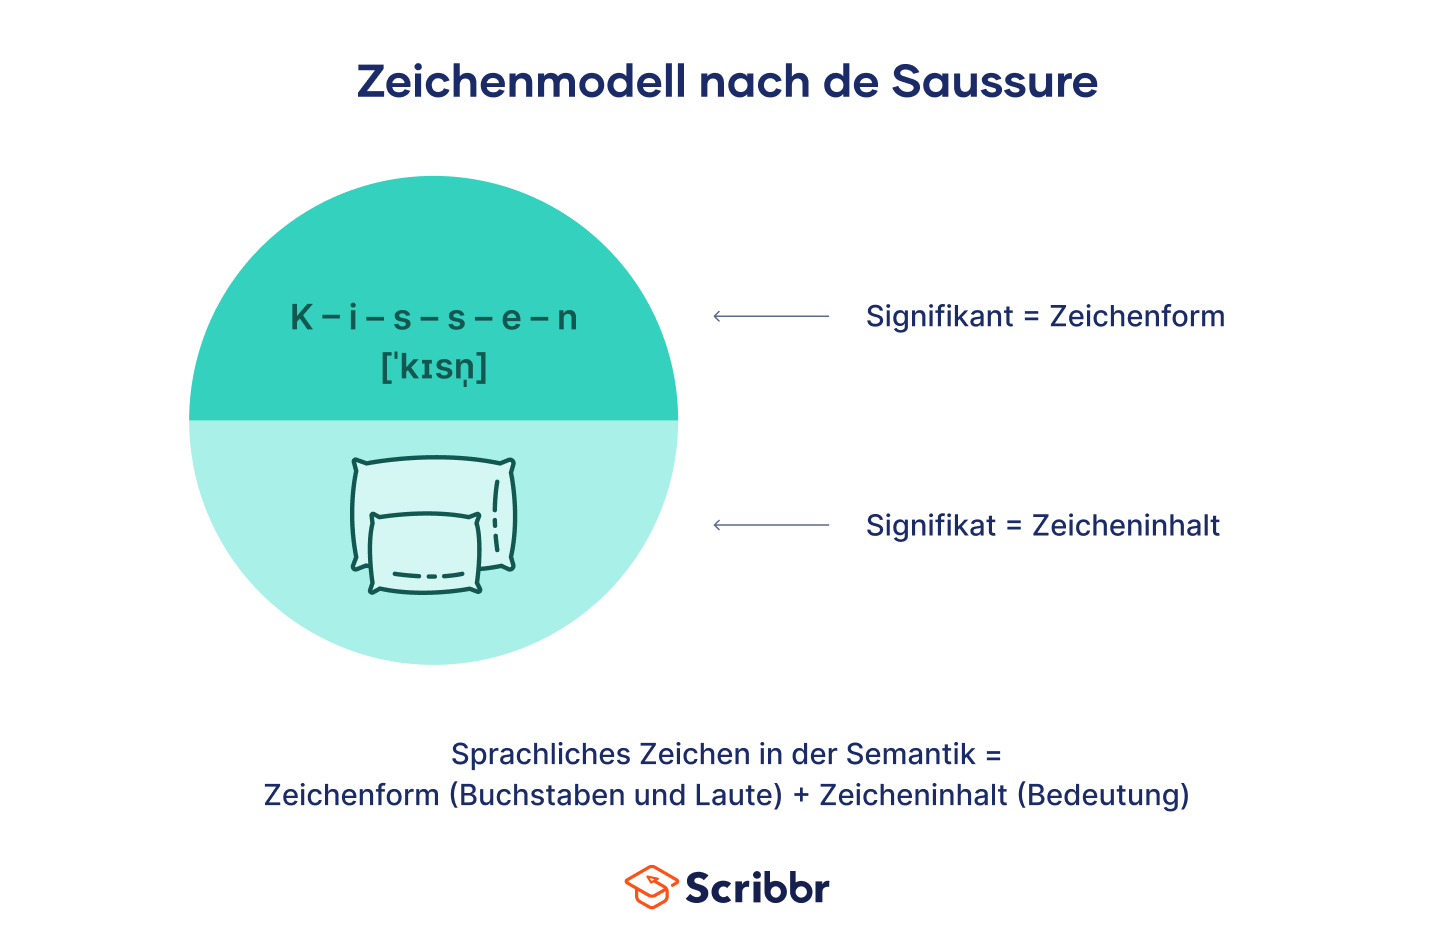 Saussure's model